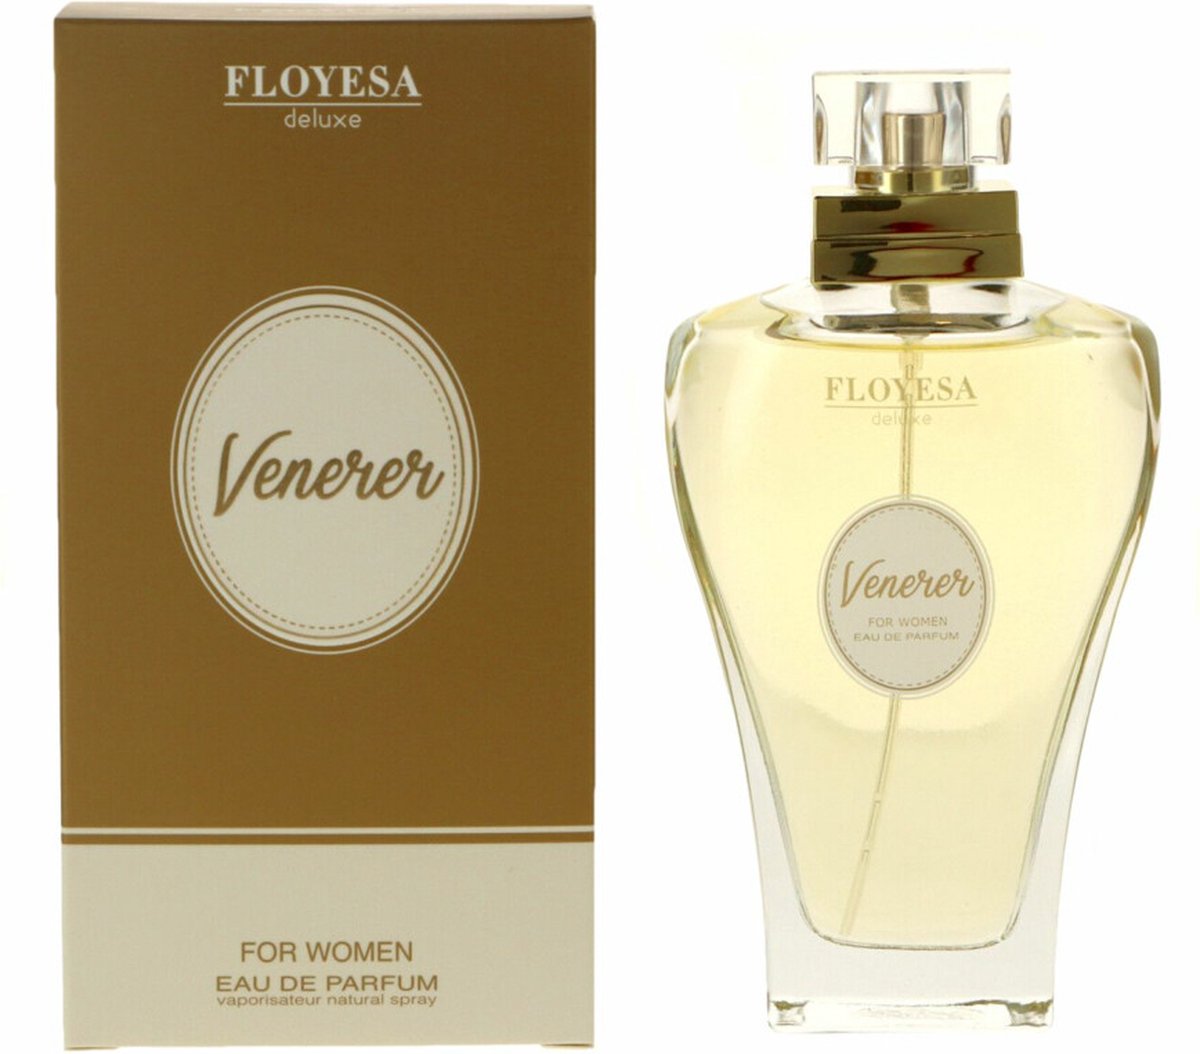 6x Floyesa Deluxe Eau de Parfum Spray Venerer 100 ml